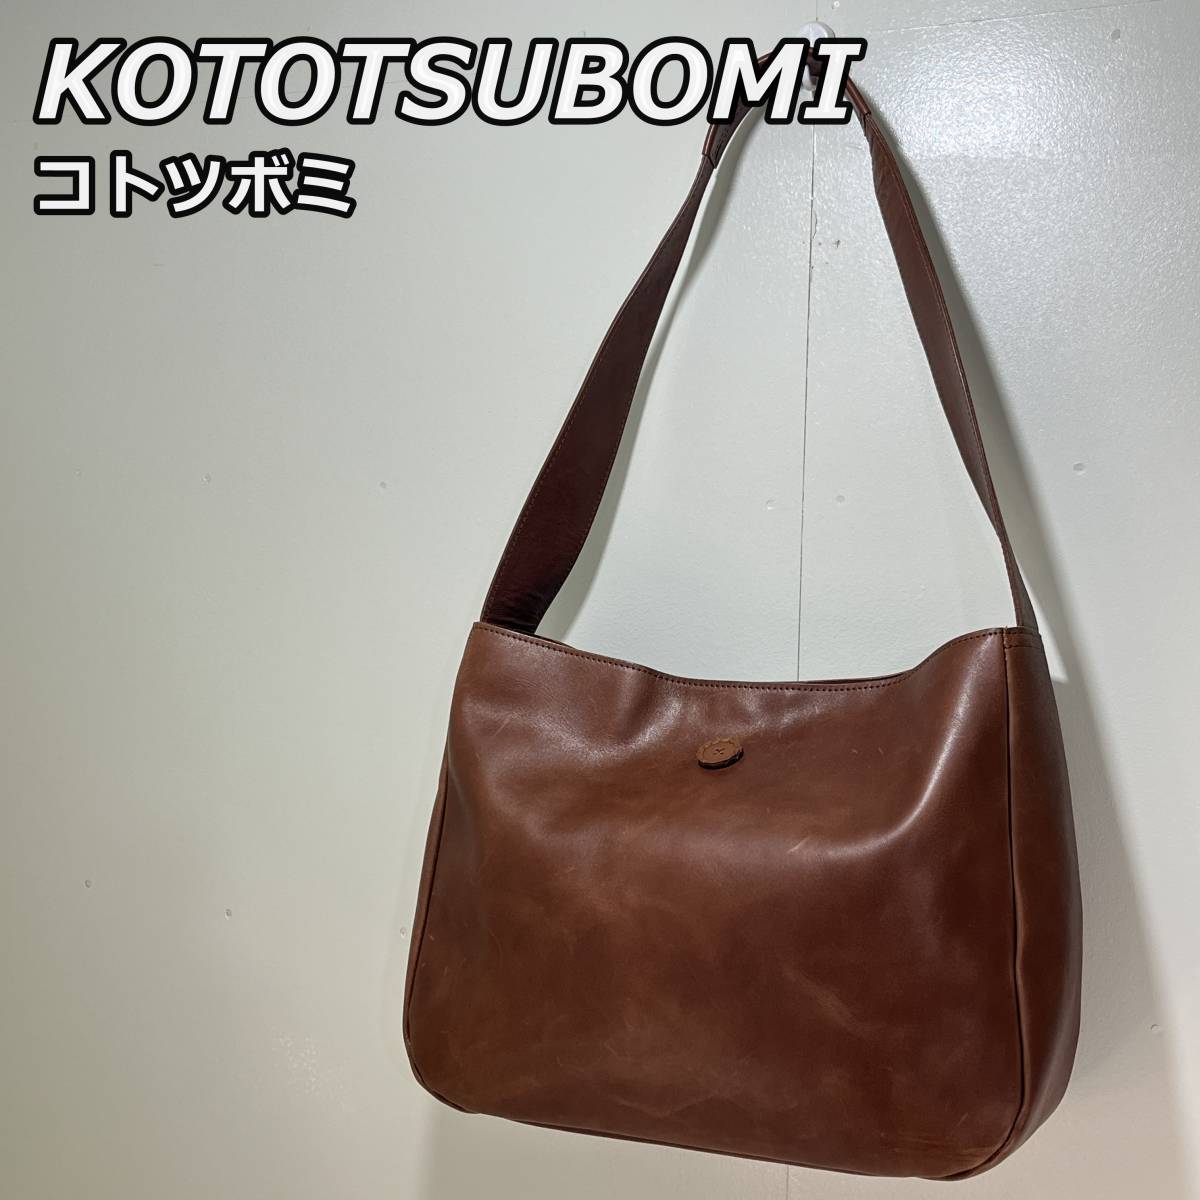 【KOTOTSUBOMI】コトツボミ レザー ワンショルダーバッグ 本革 肩掛けかばん 茶色 ブラウン